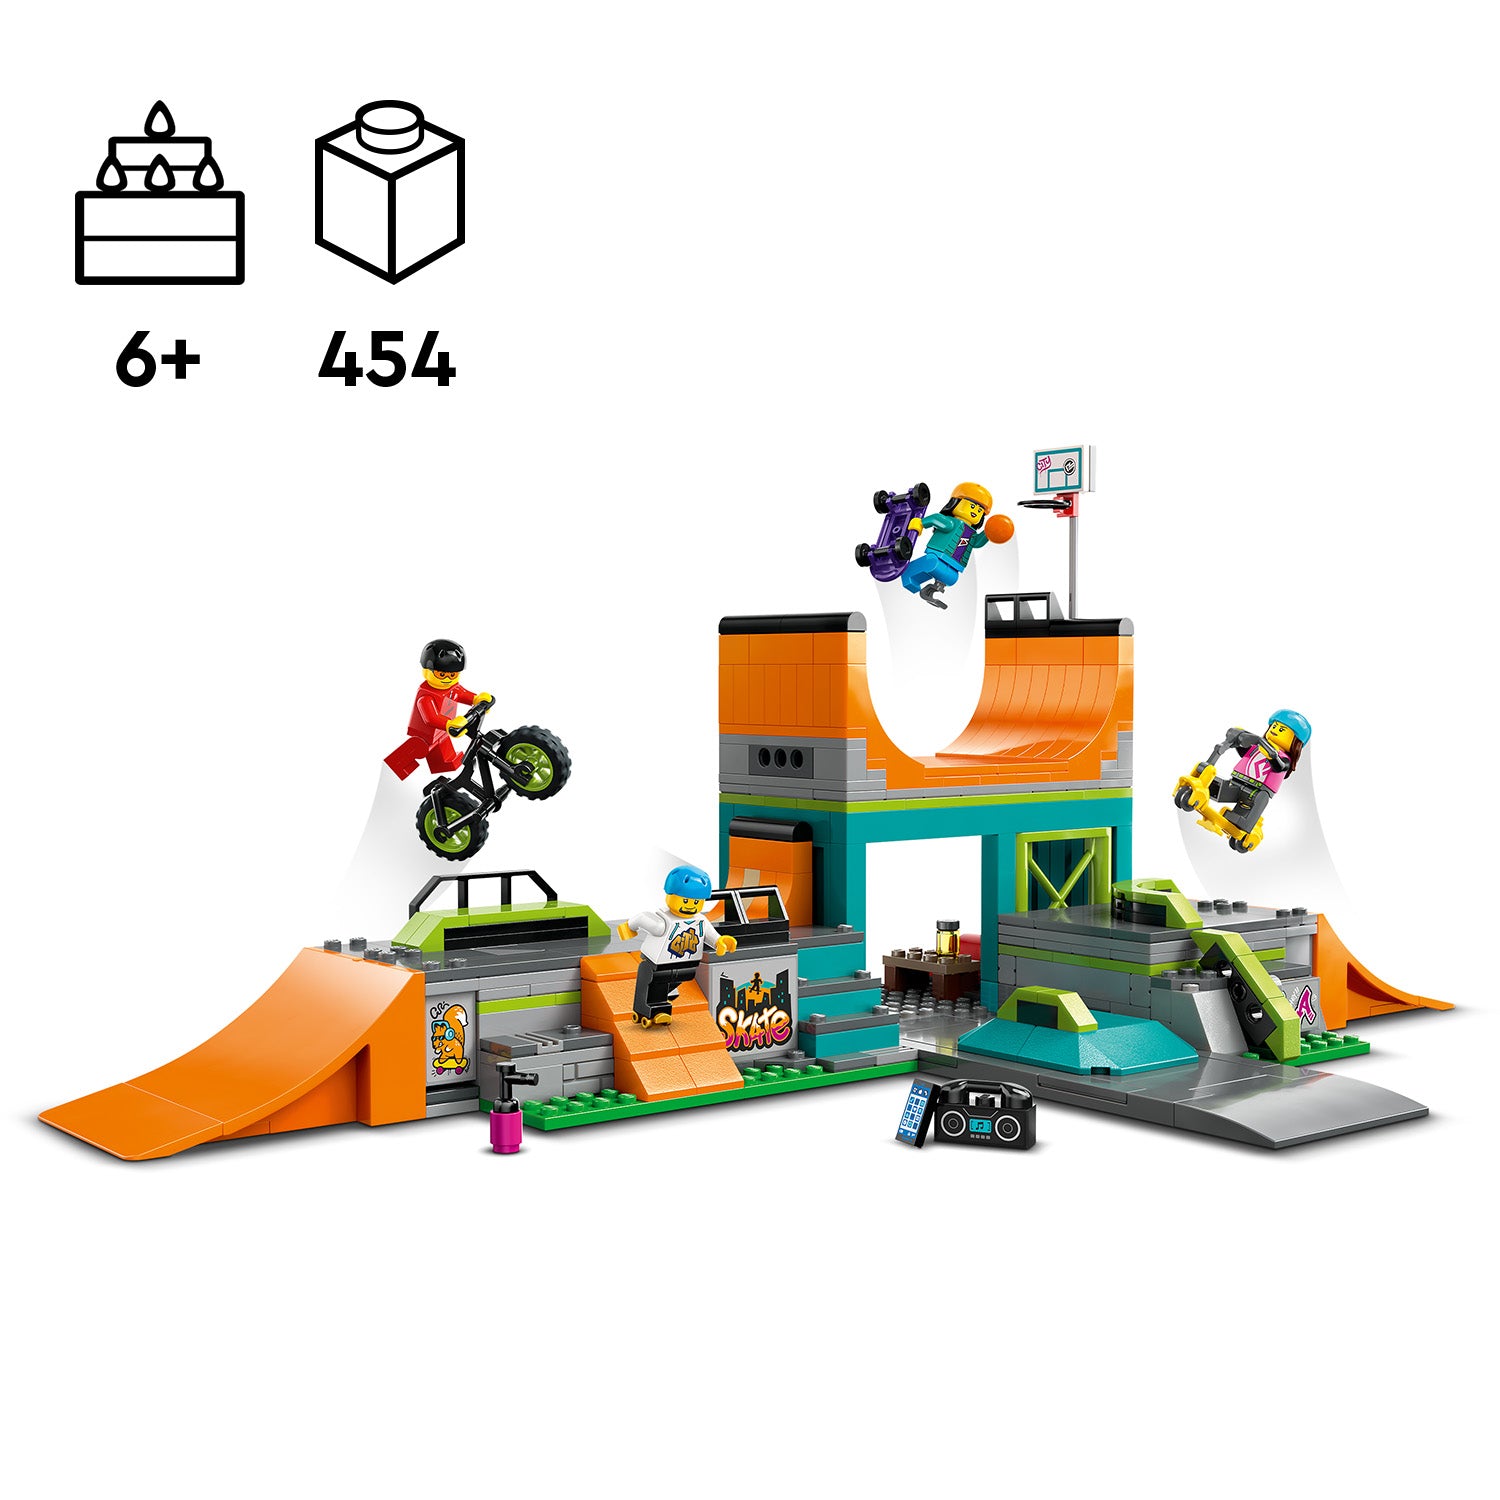 Lego 60364 Street Skate Park